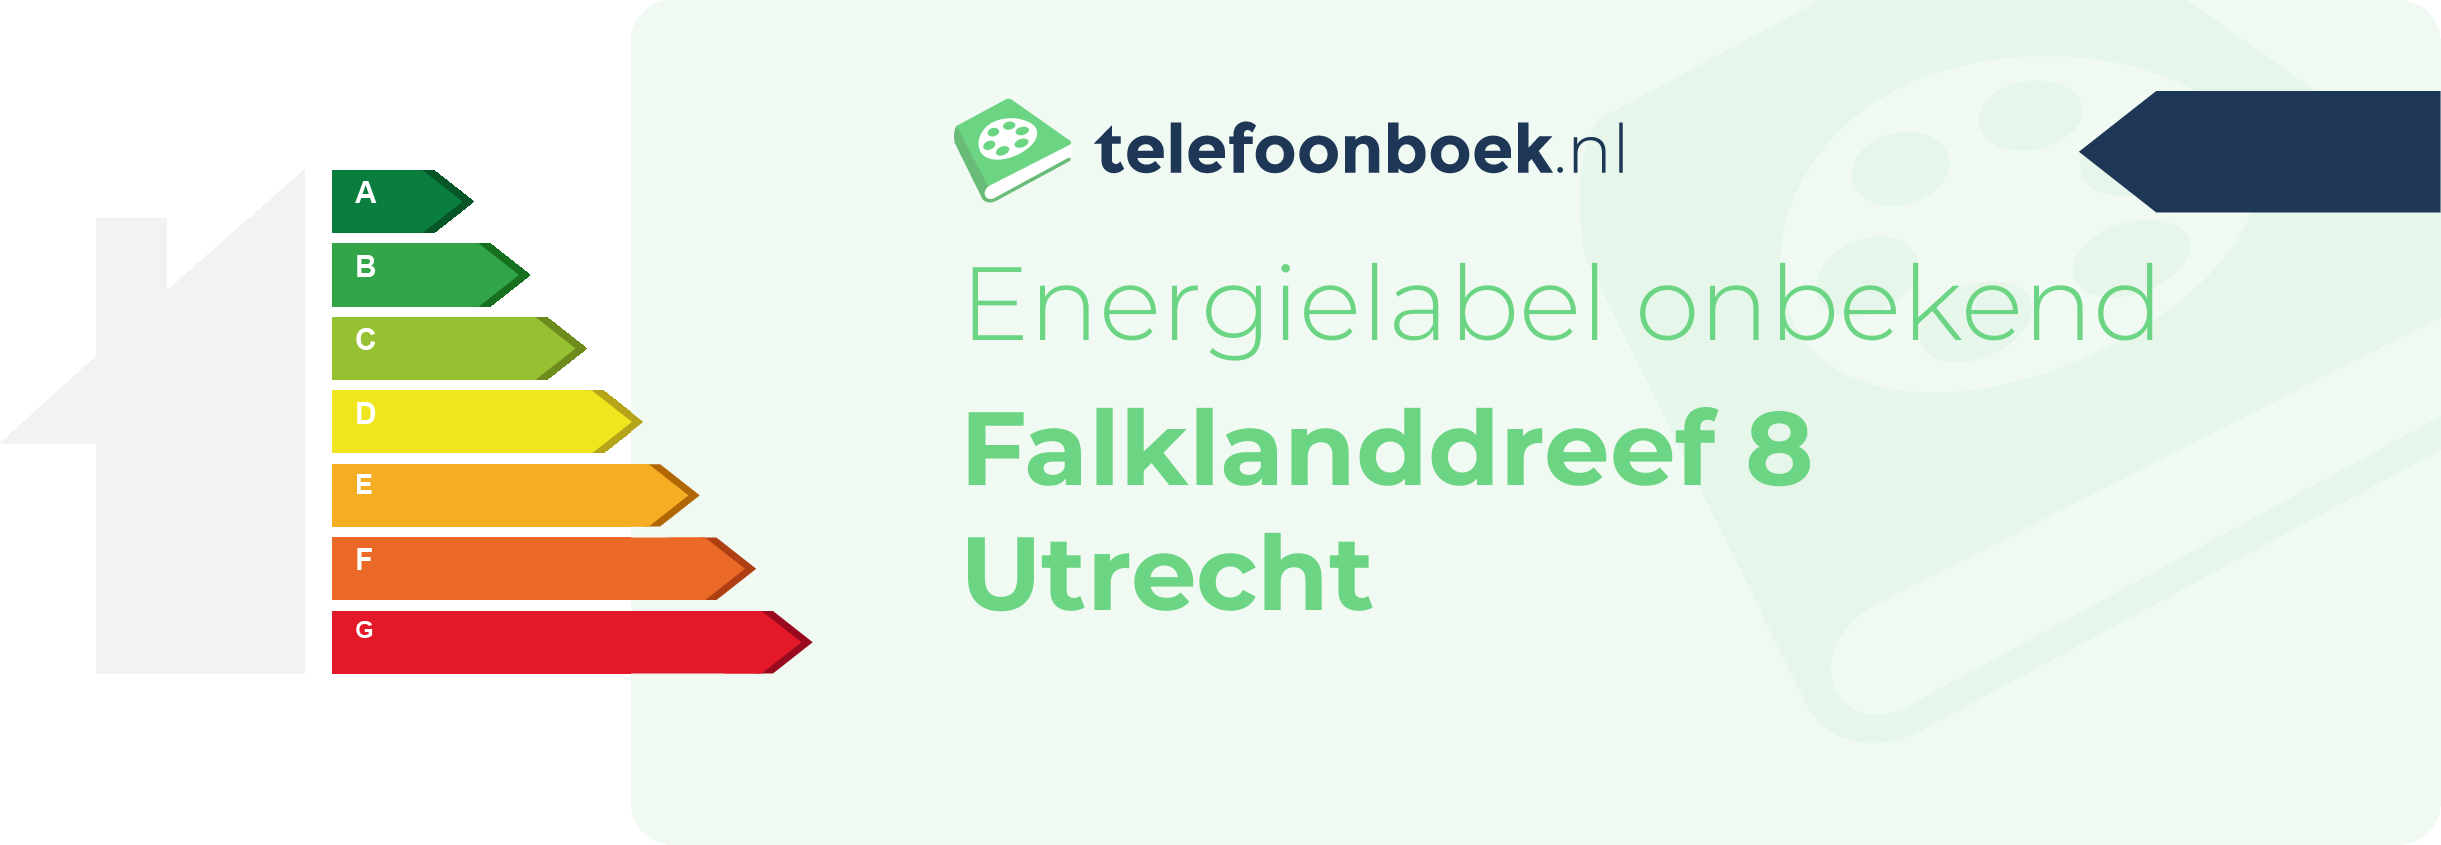 Energielabel Falklanddreef 8 Utrecht